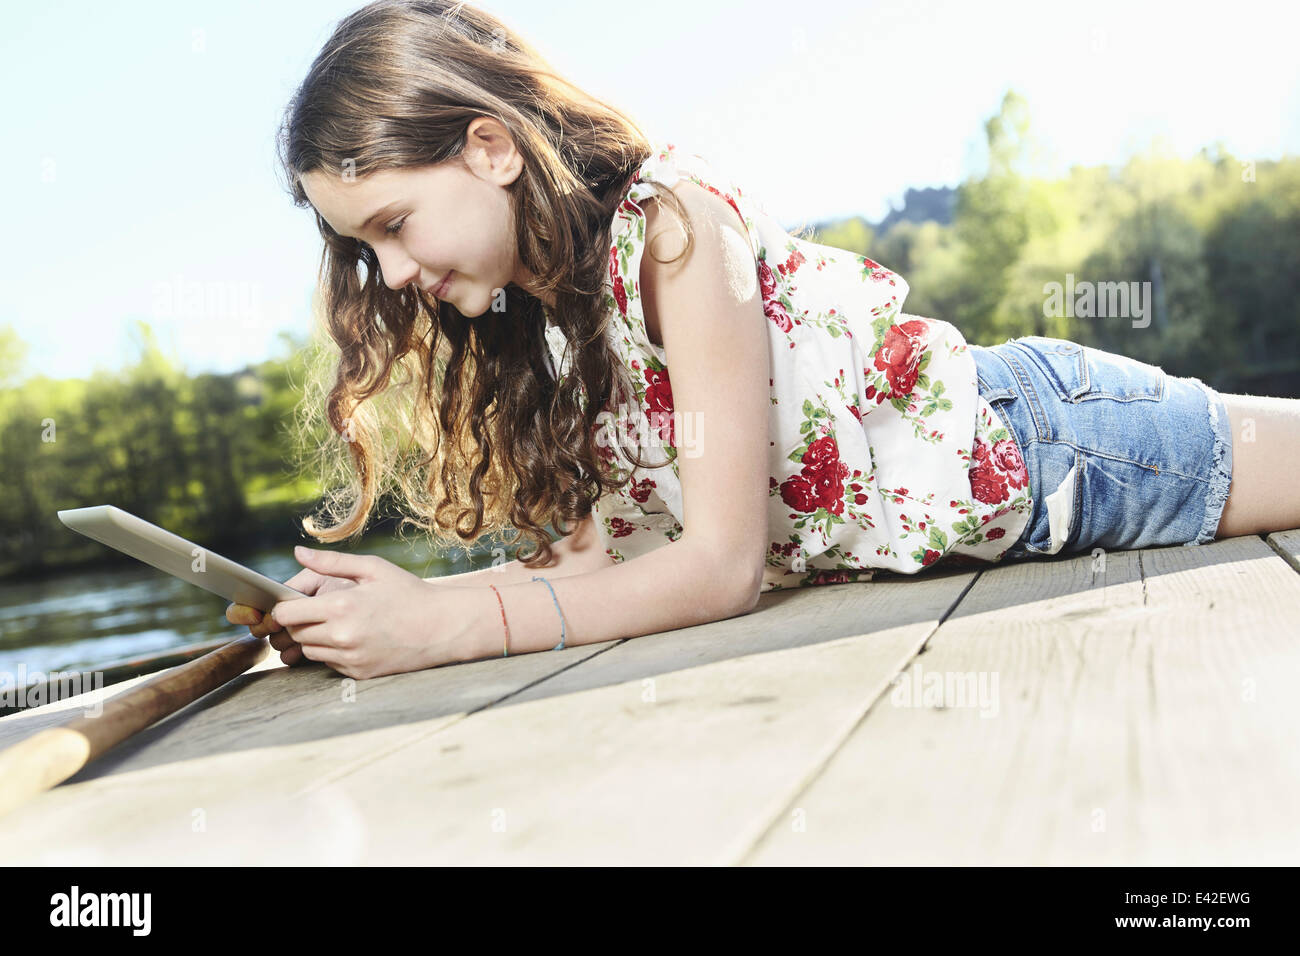 Girl using digital tablet on jetty Stock Photo